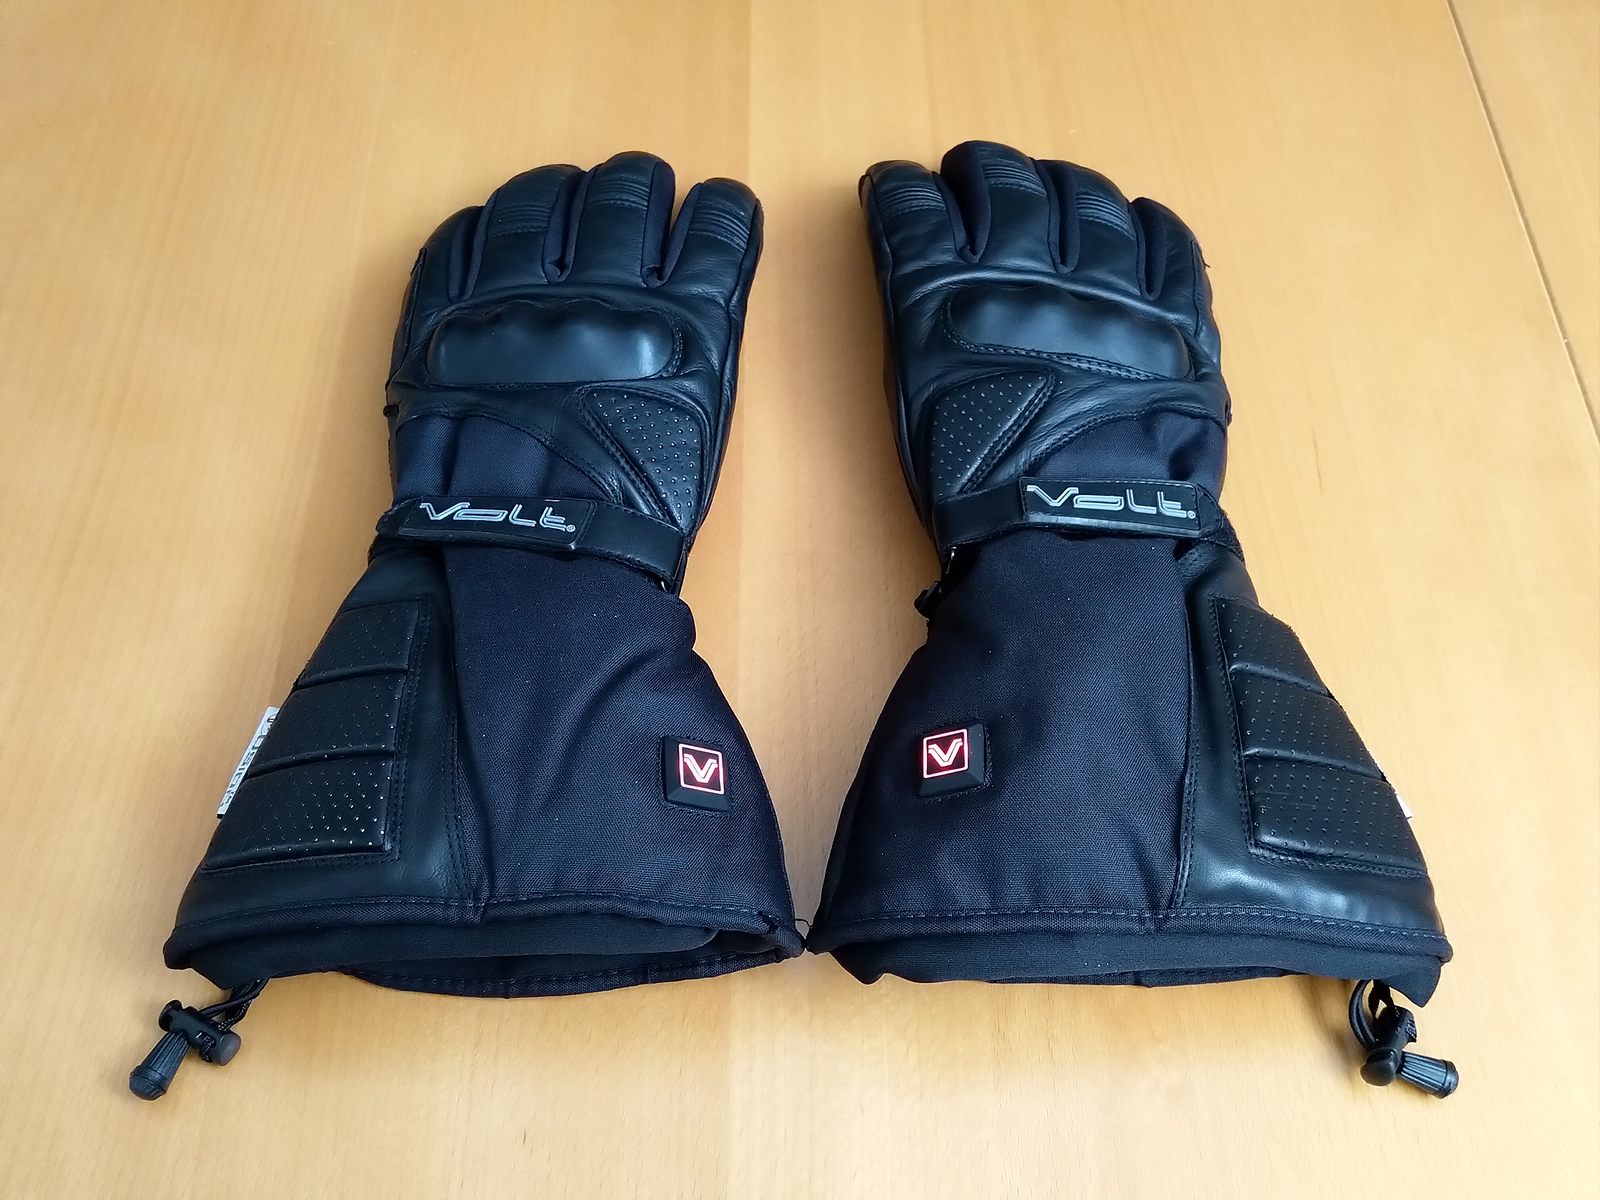 https://www.webbikeworld.com/wp-content/uploads/2020/04/wbw-volt-fusion-heated-gloves-23.jpg